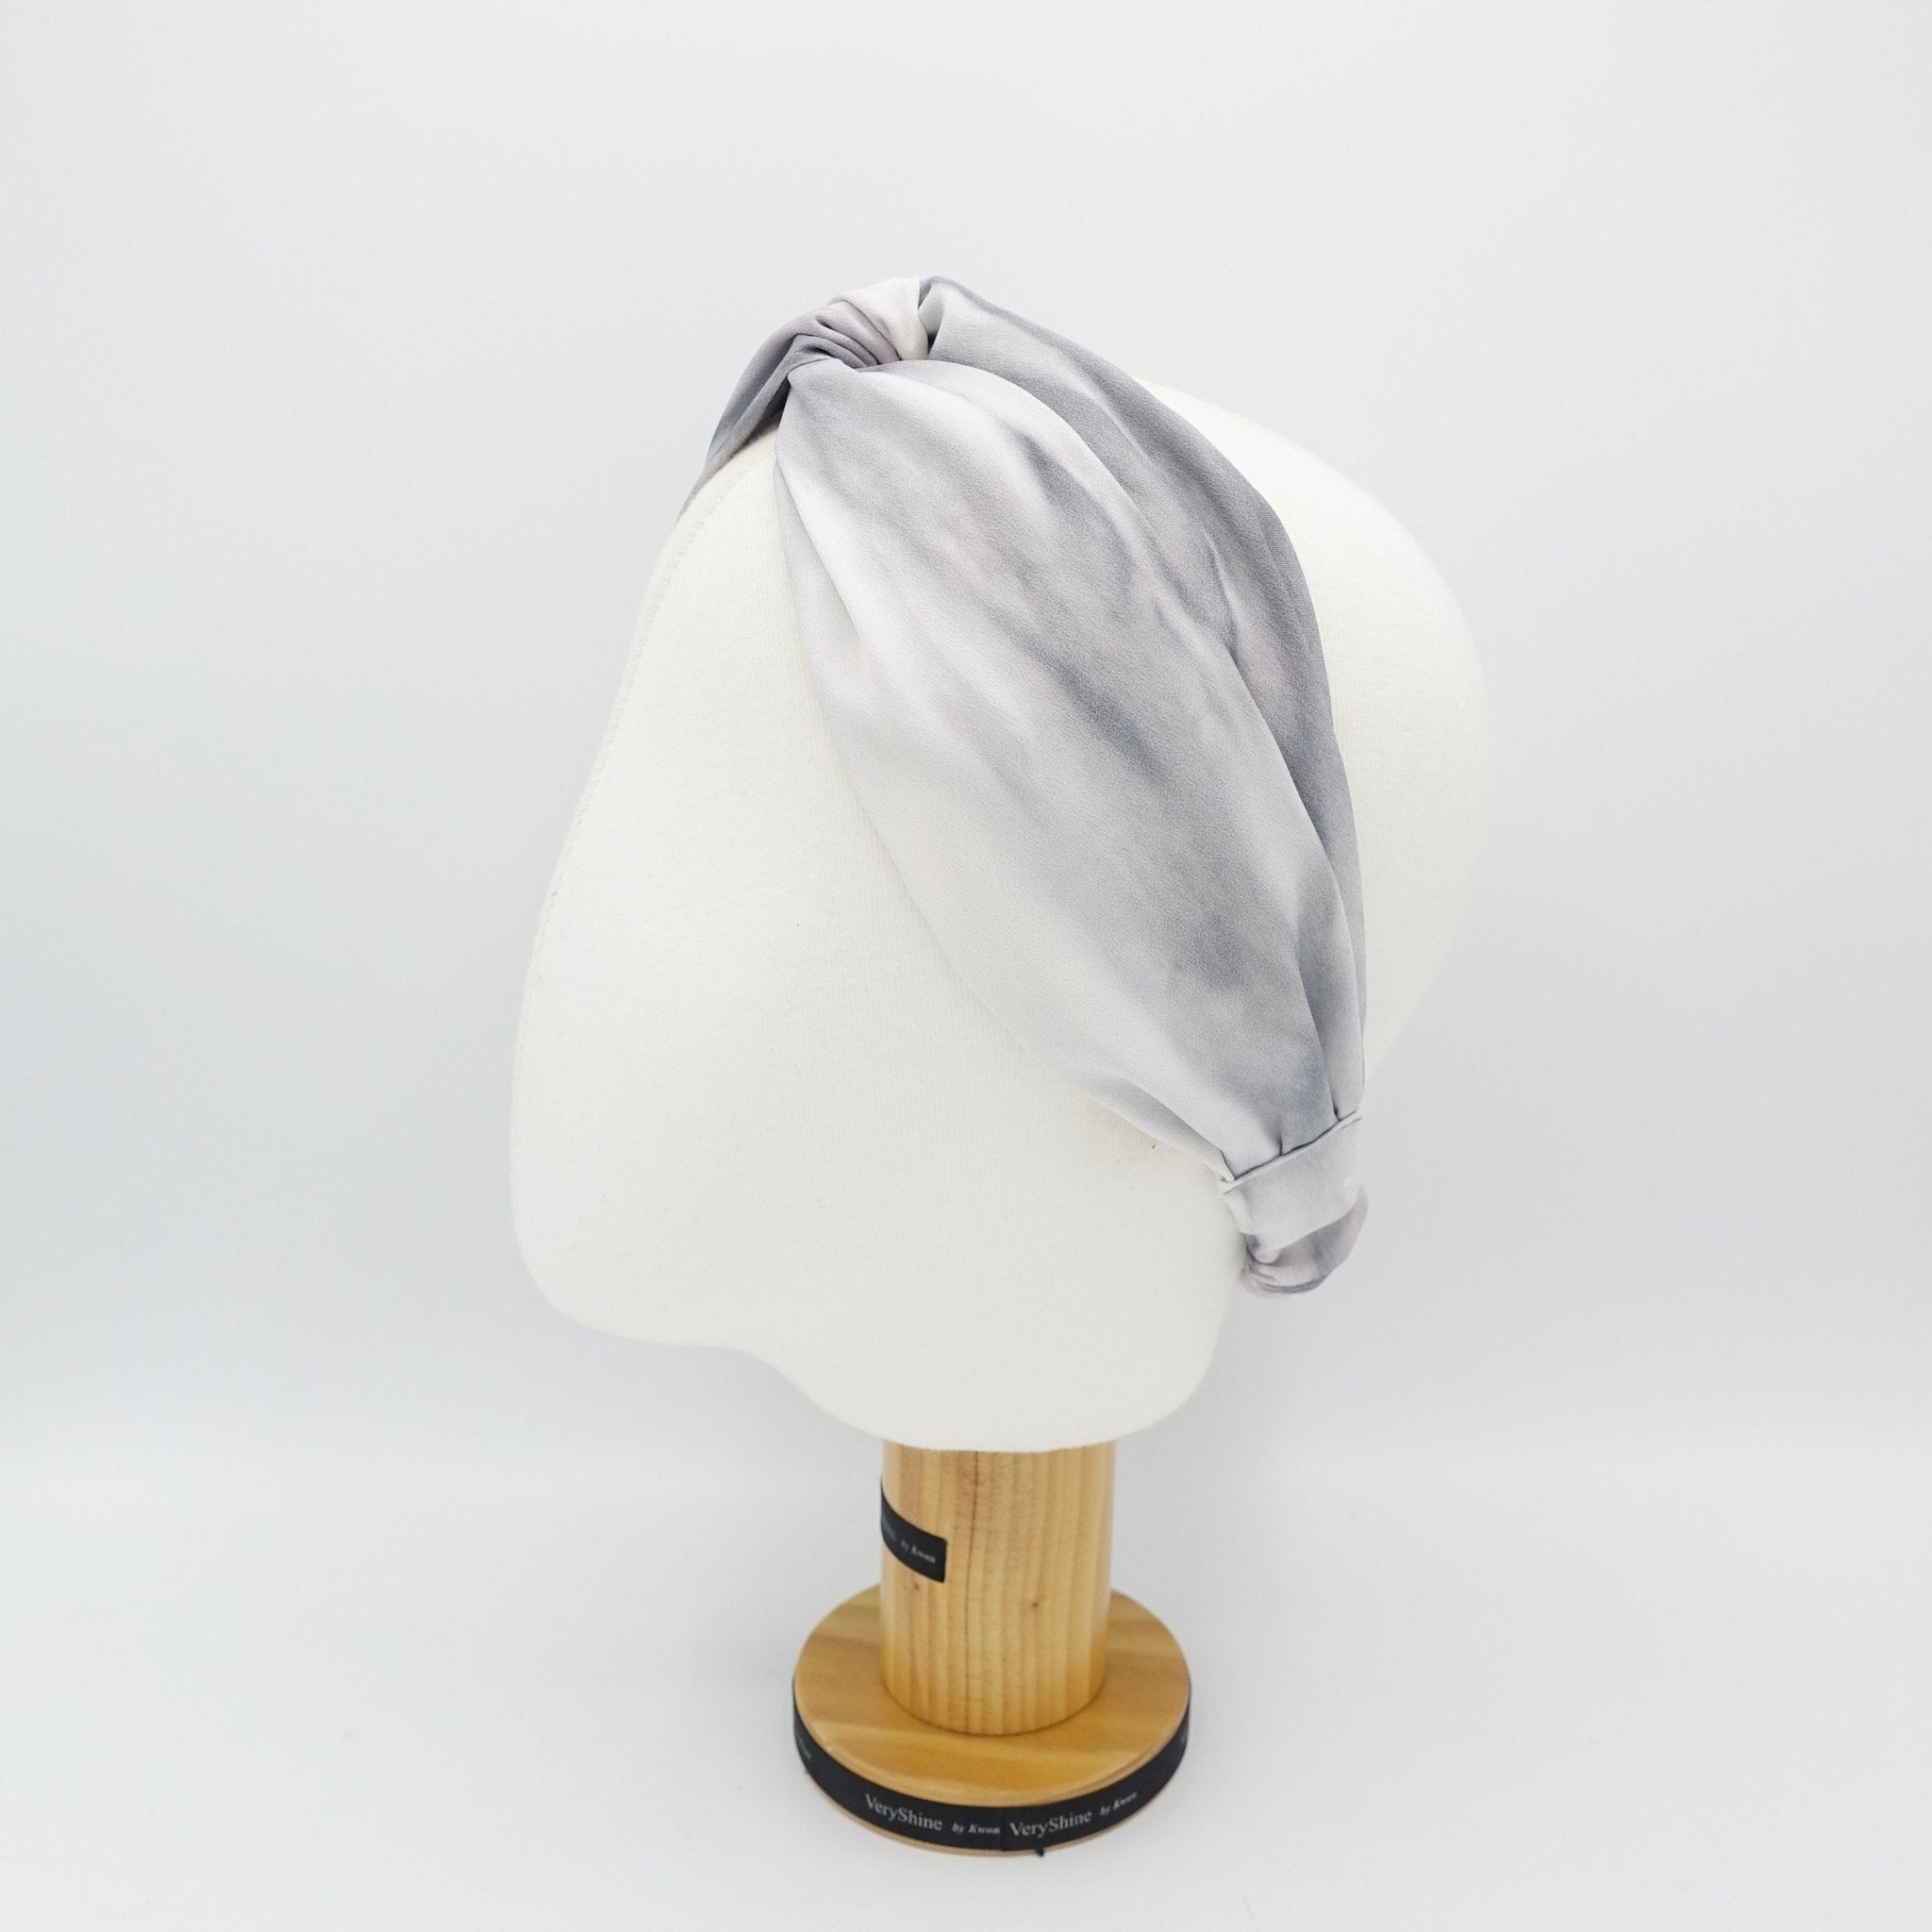 VeryShine tie dye pattern hair turban cross headband color gradation hair accessory for women